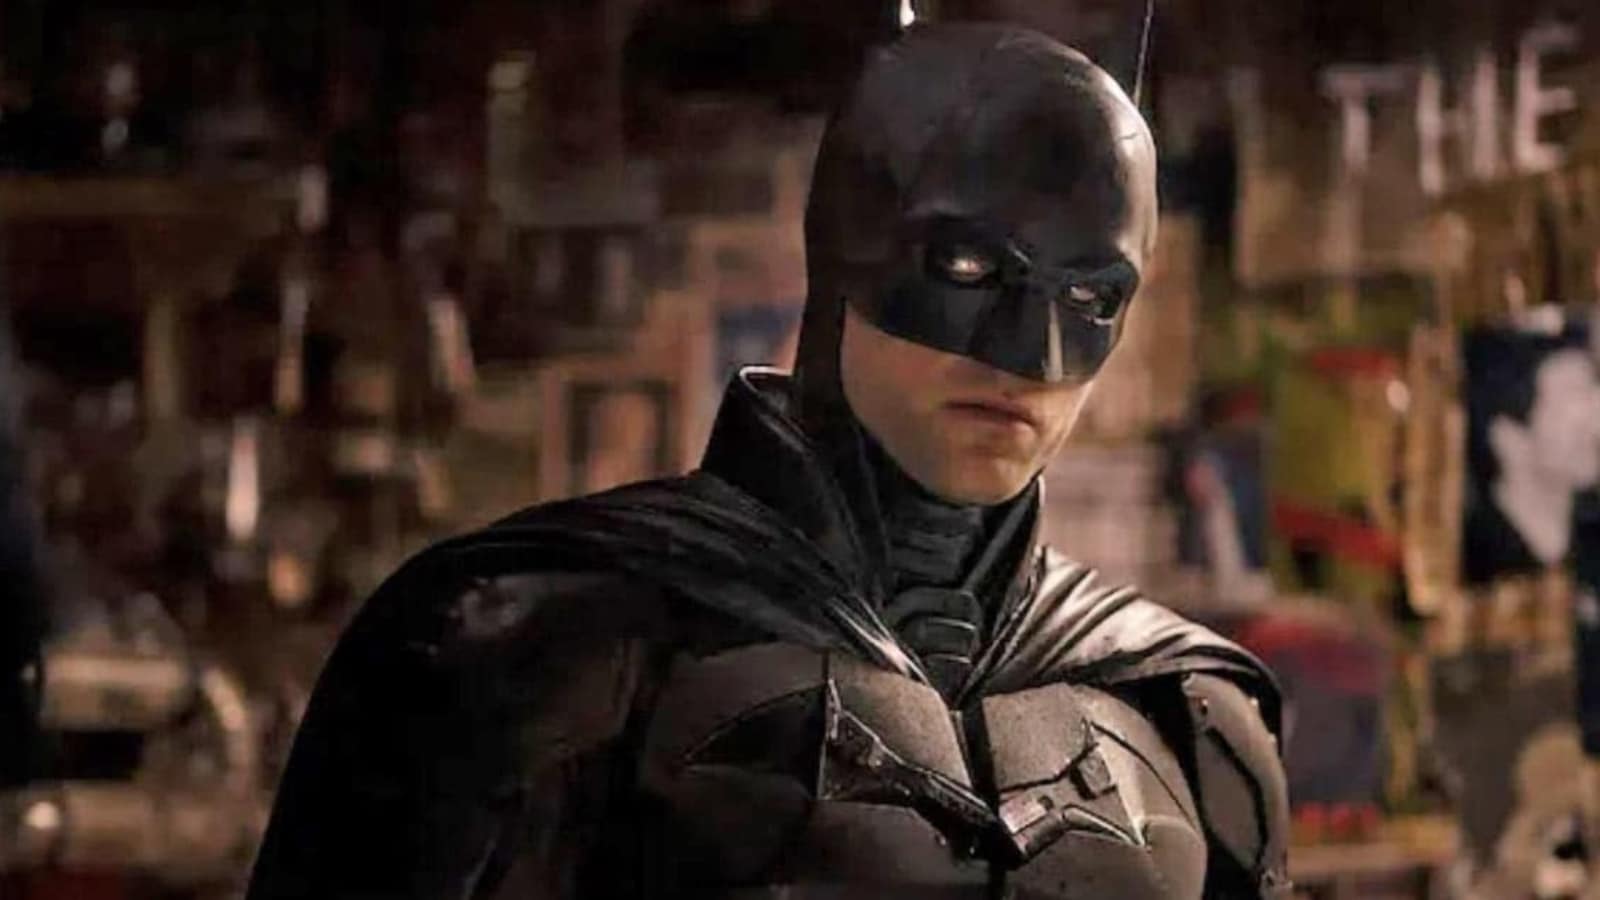 The Batman crosses $500 million at worldwide box office, is Warner Bros’ most successful movie since Joker